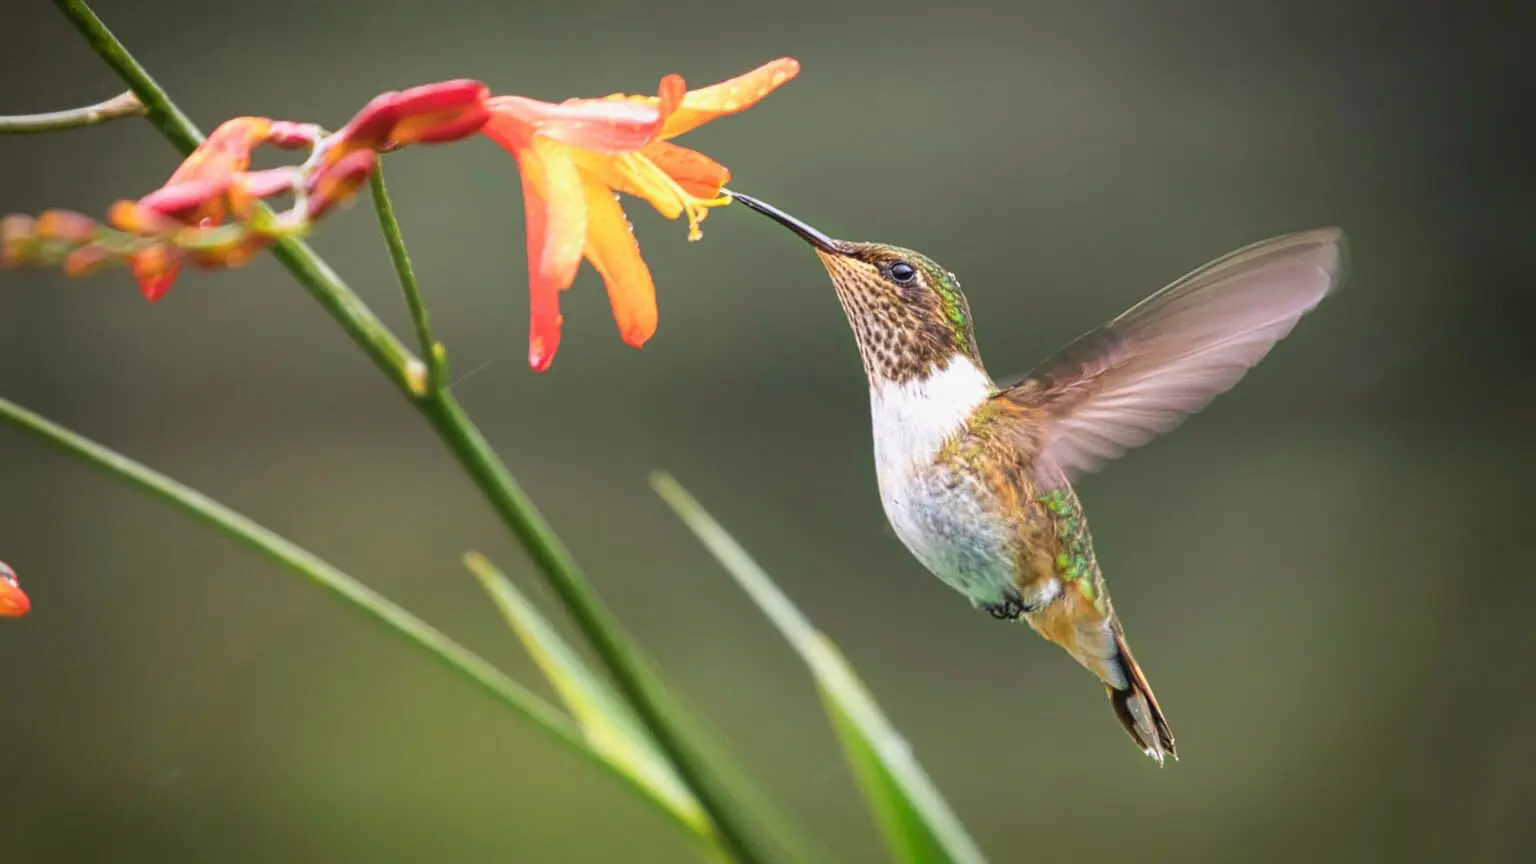 Hummingbirds are amazing